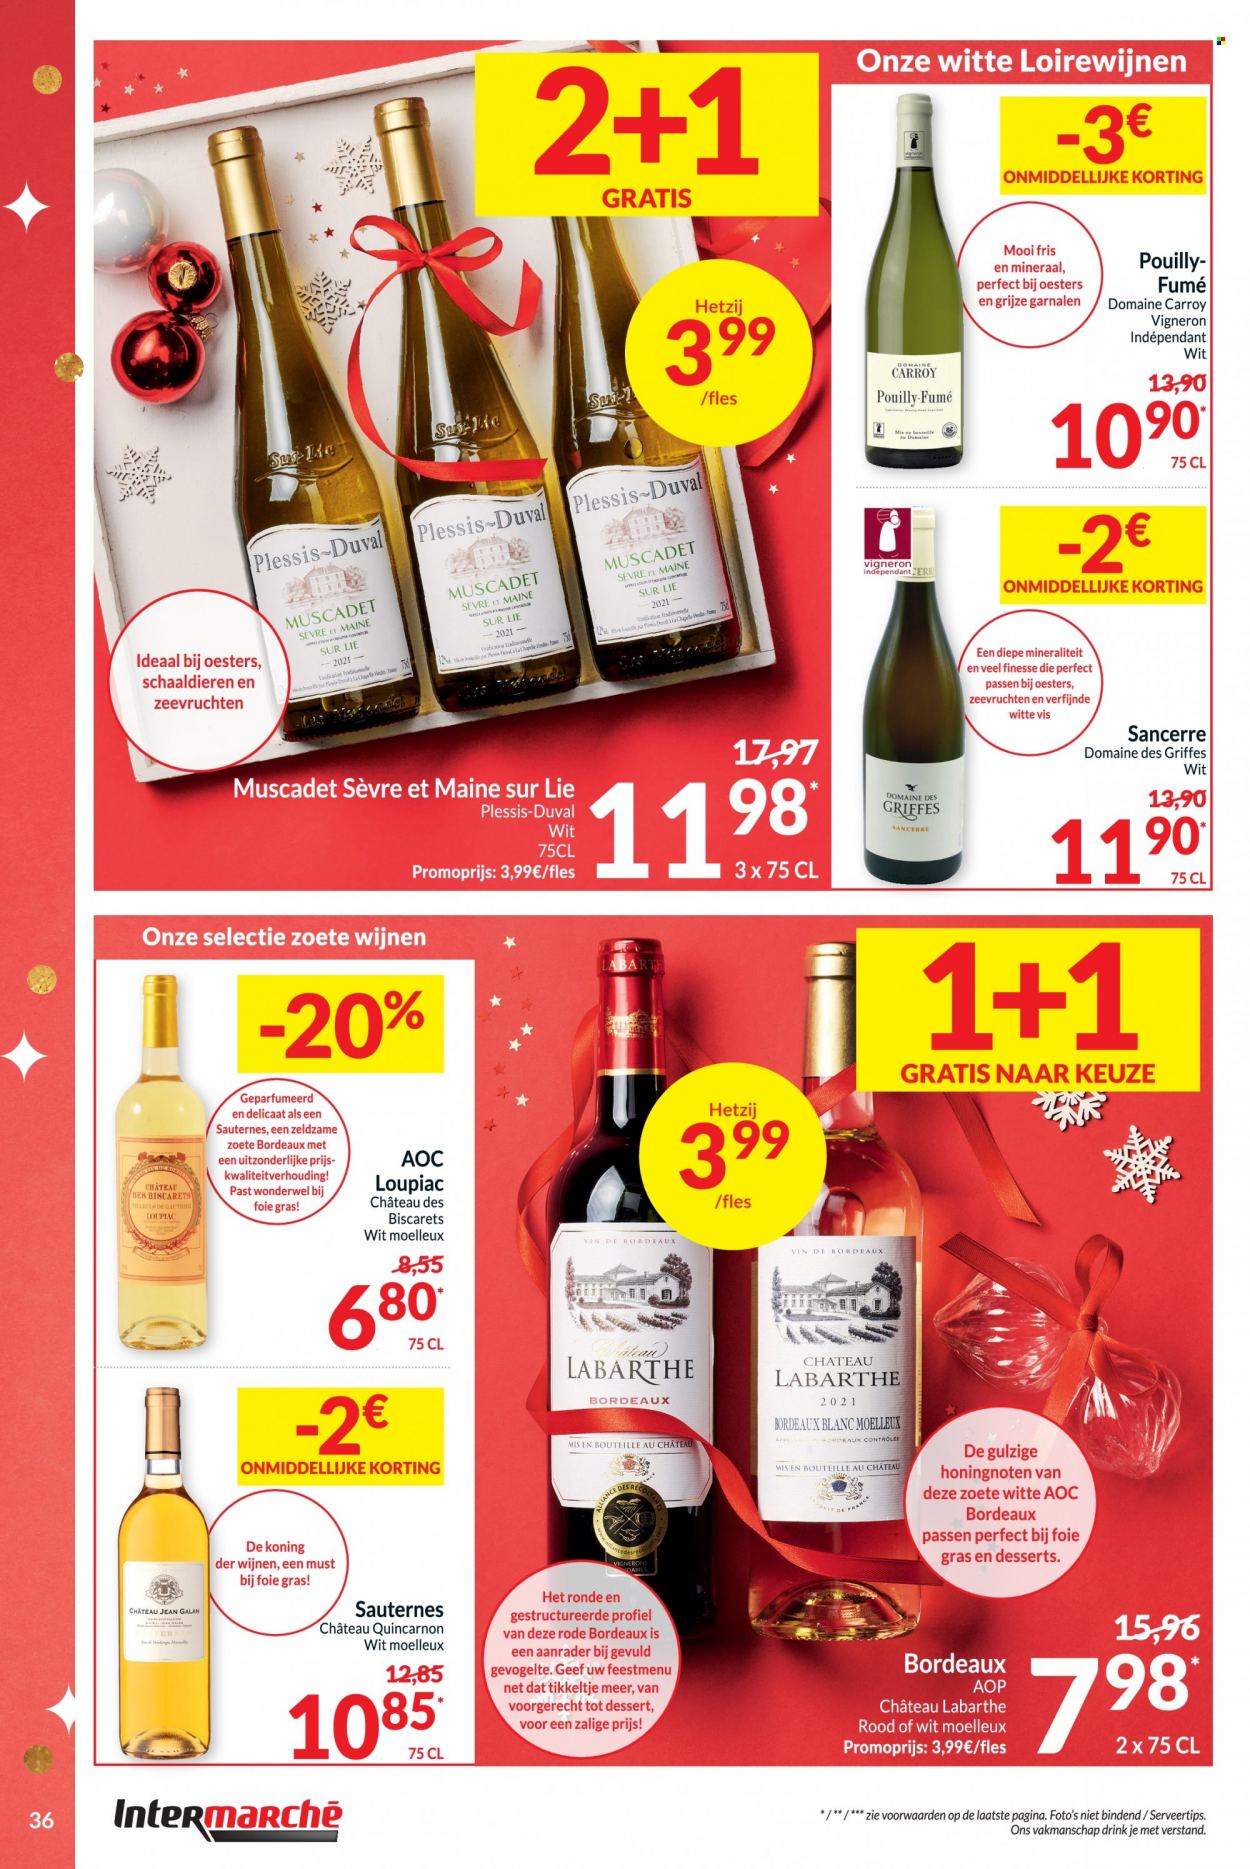 thumbnail - Intermarché-aanbieding - 22/11/2022 - 31/12/2022 -  producten in de aanbieding - oesters, foie gras, wijn, Sauternes, Bordeaux. Pagina 36.